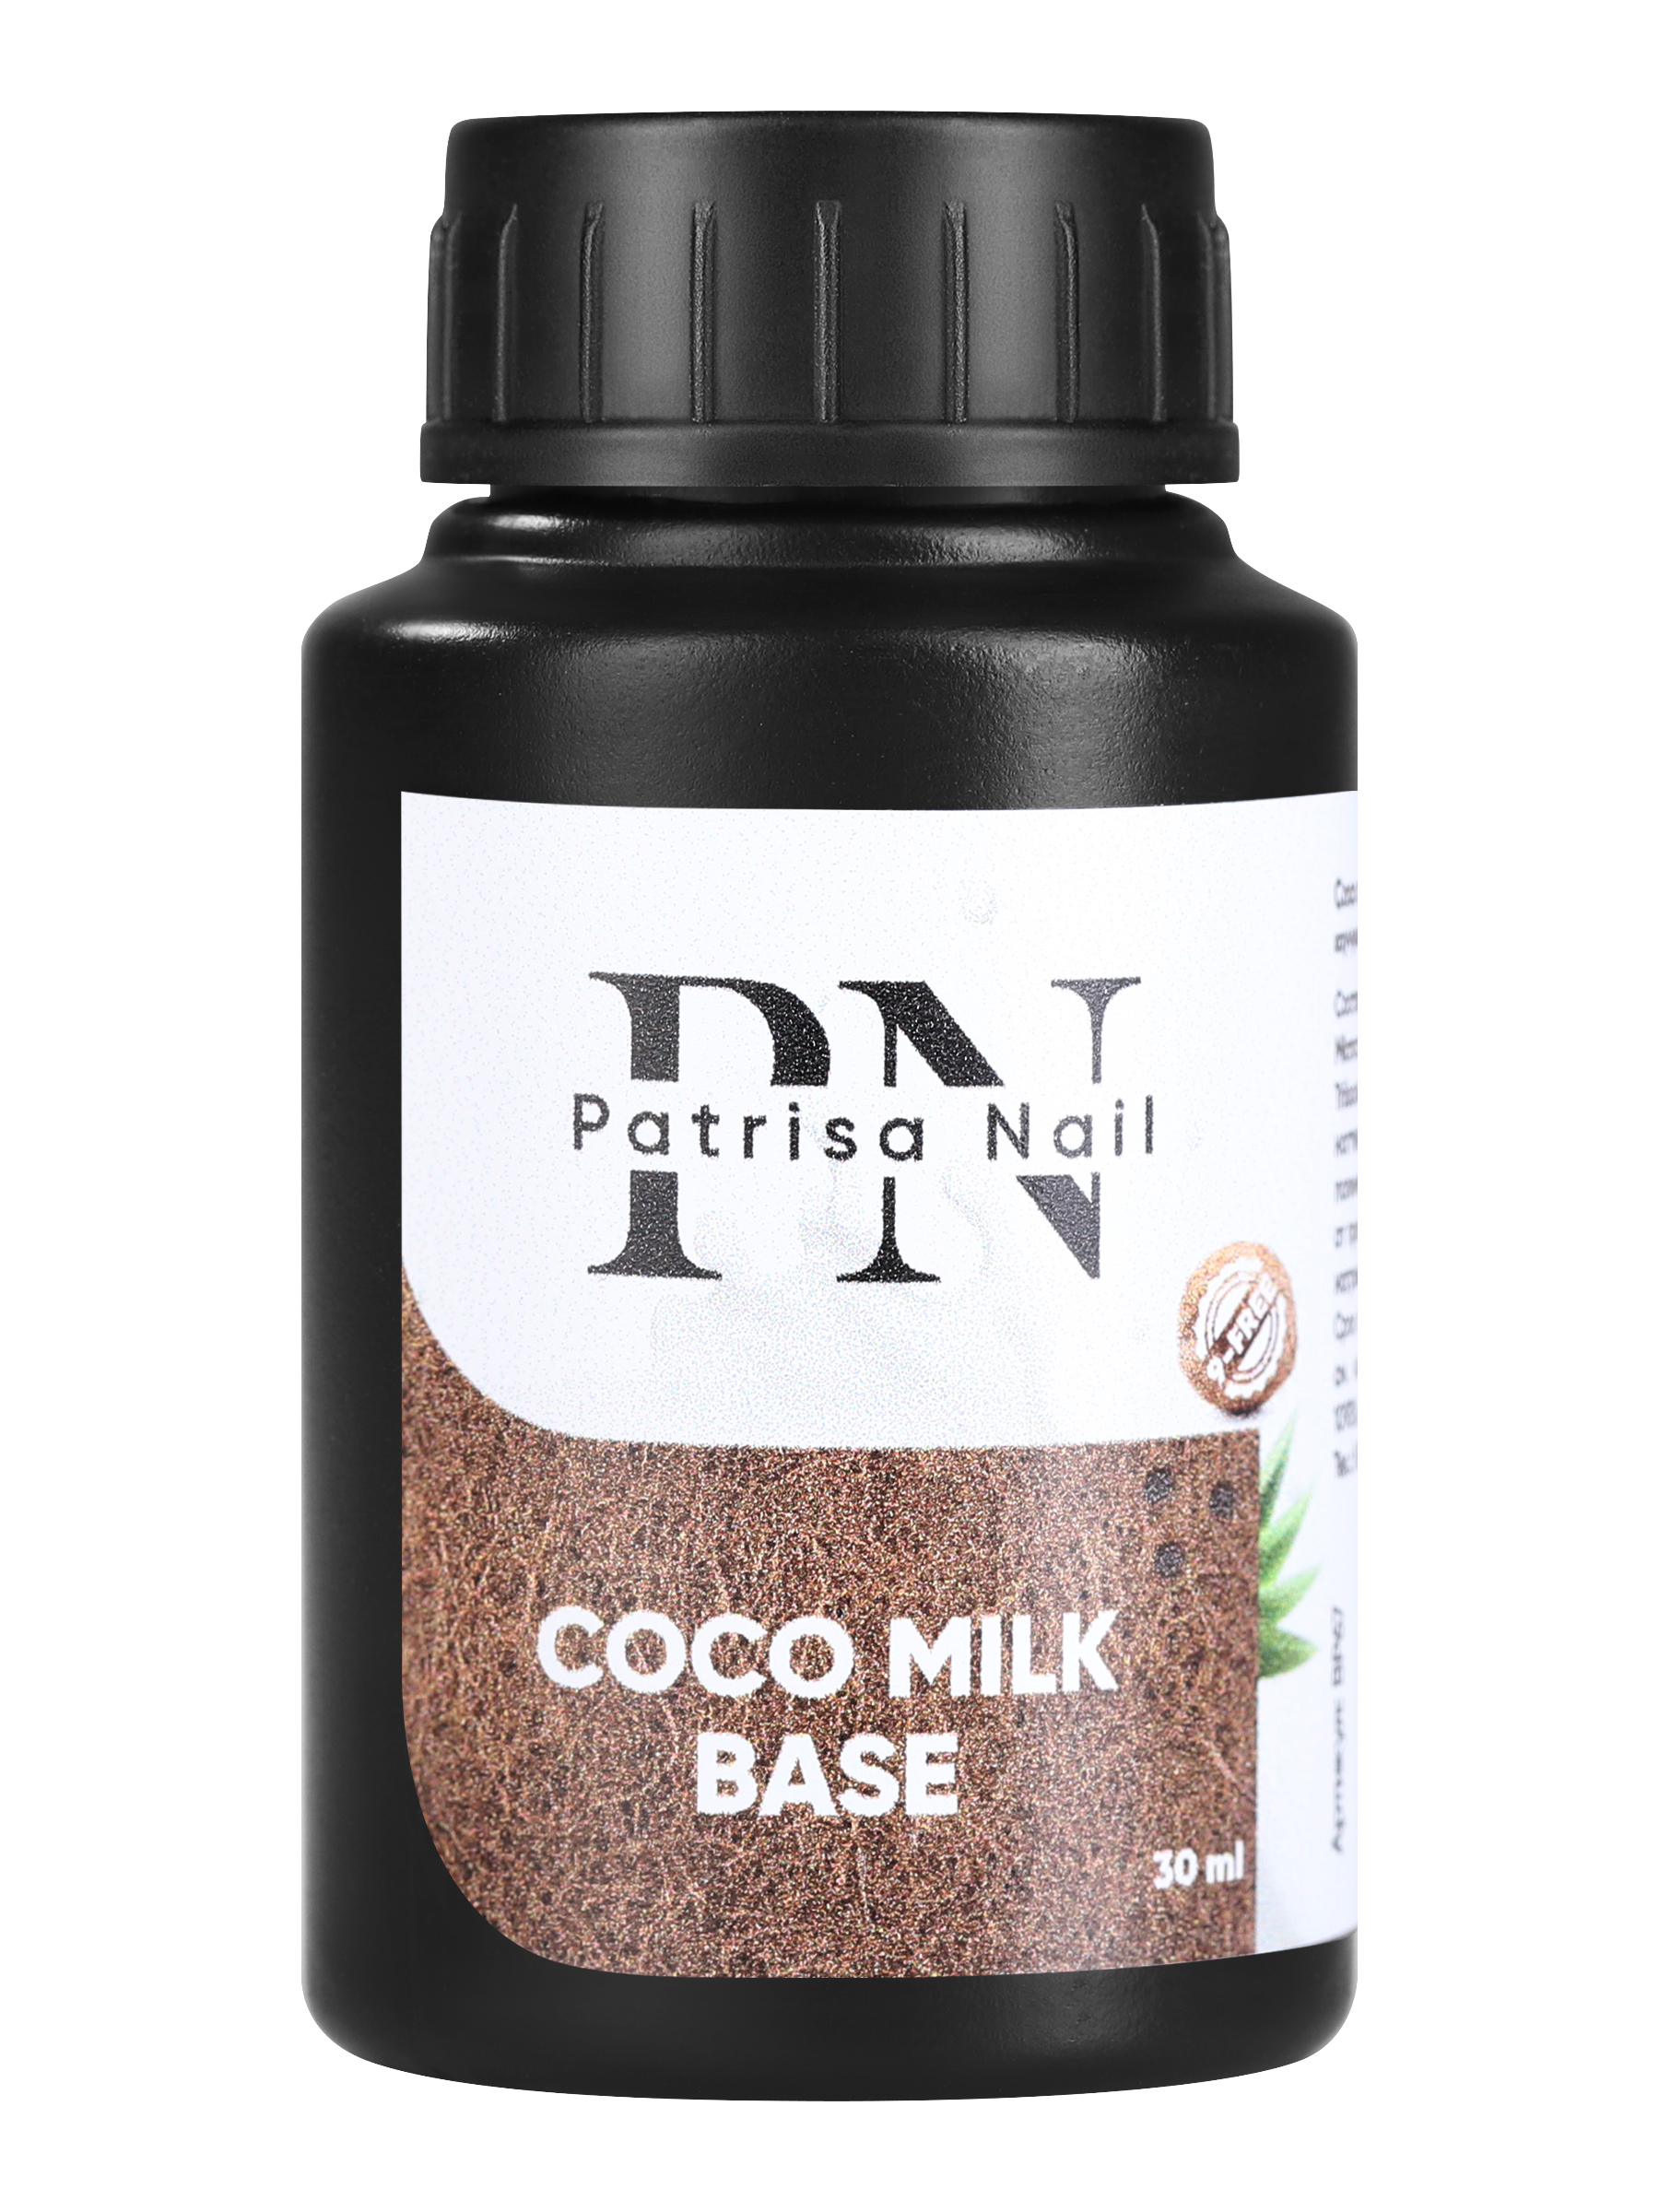 База для гель-лака Patrisa Nail Coco milk base камуфлирующая каучуковая молочная, 30 мл patrisa nail каучуковая база прима